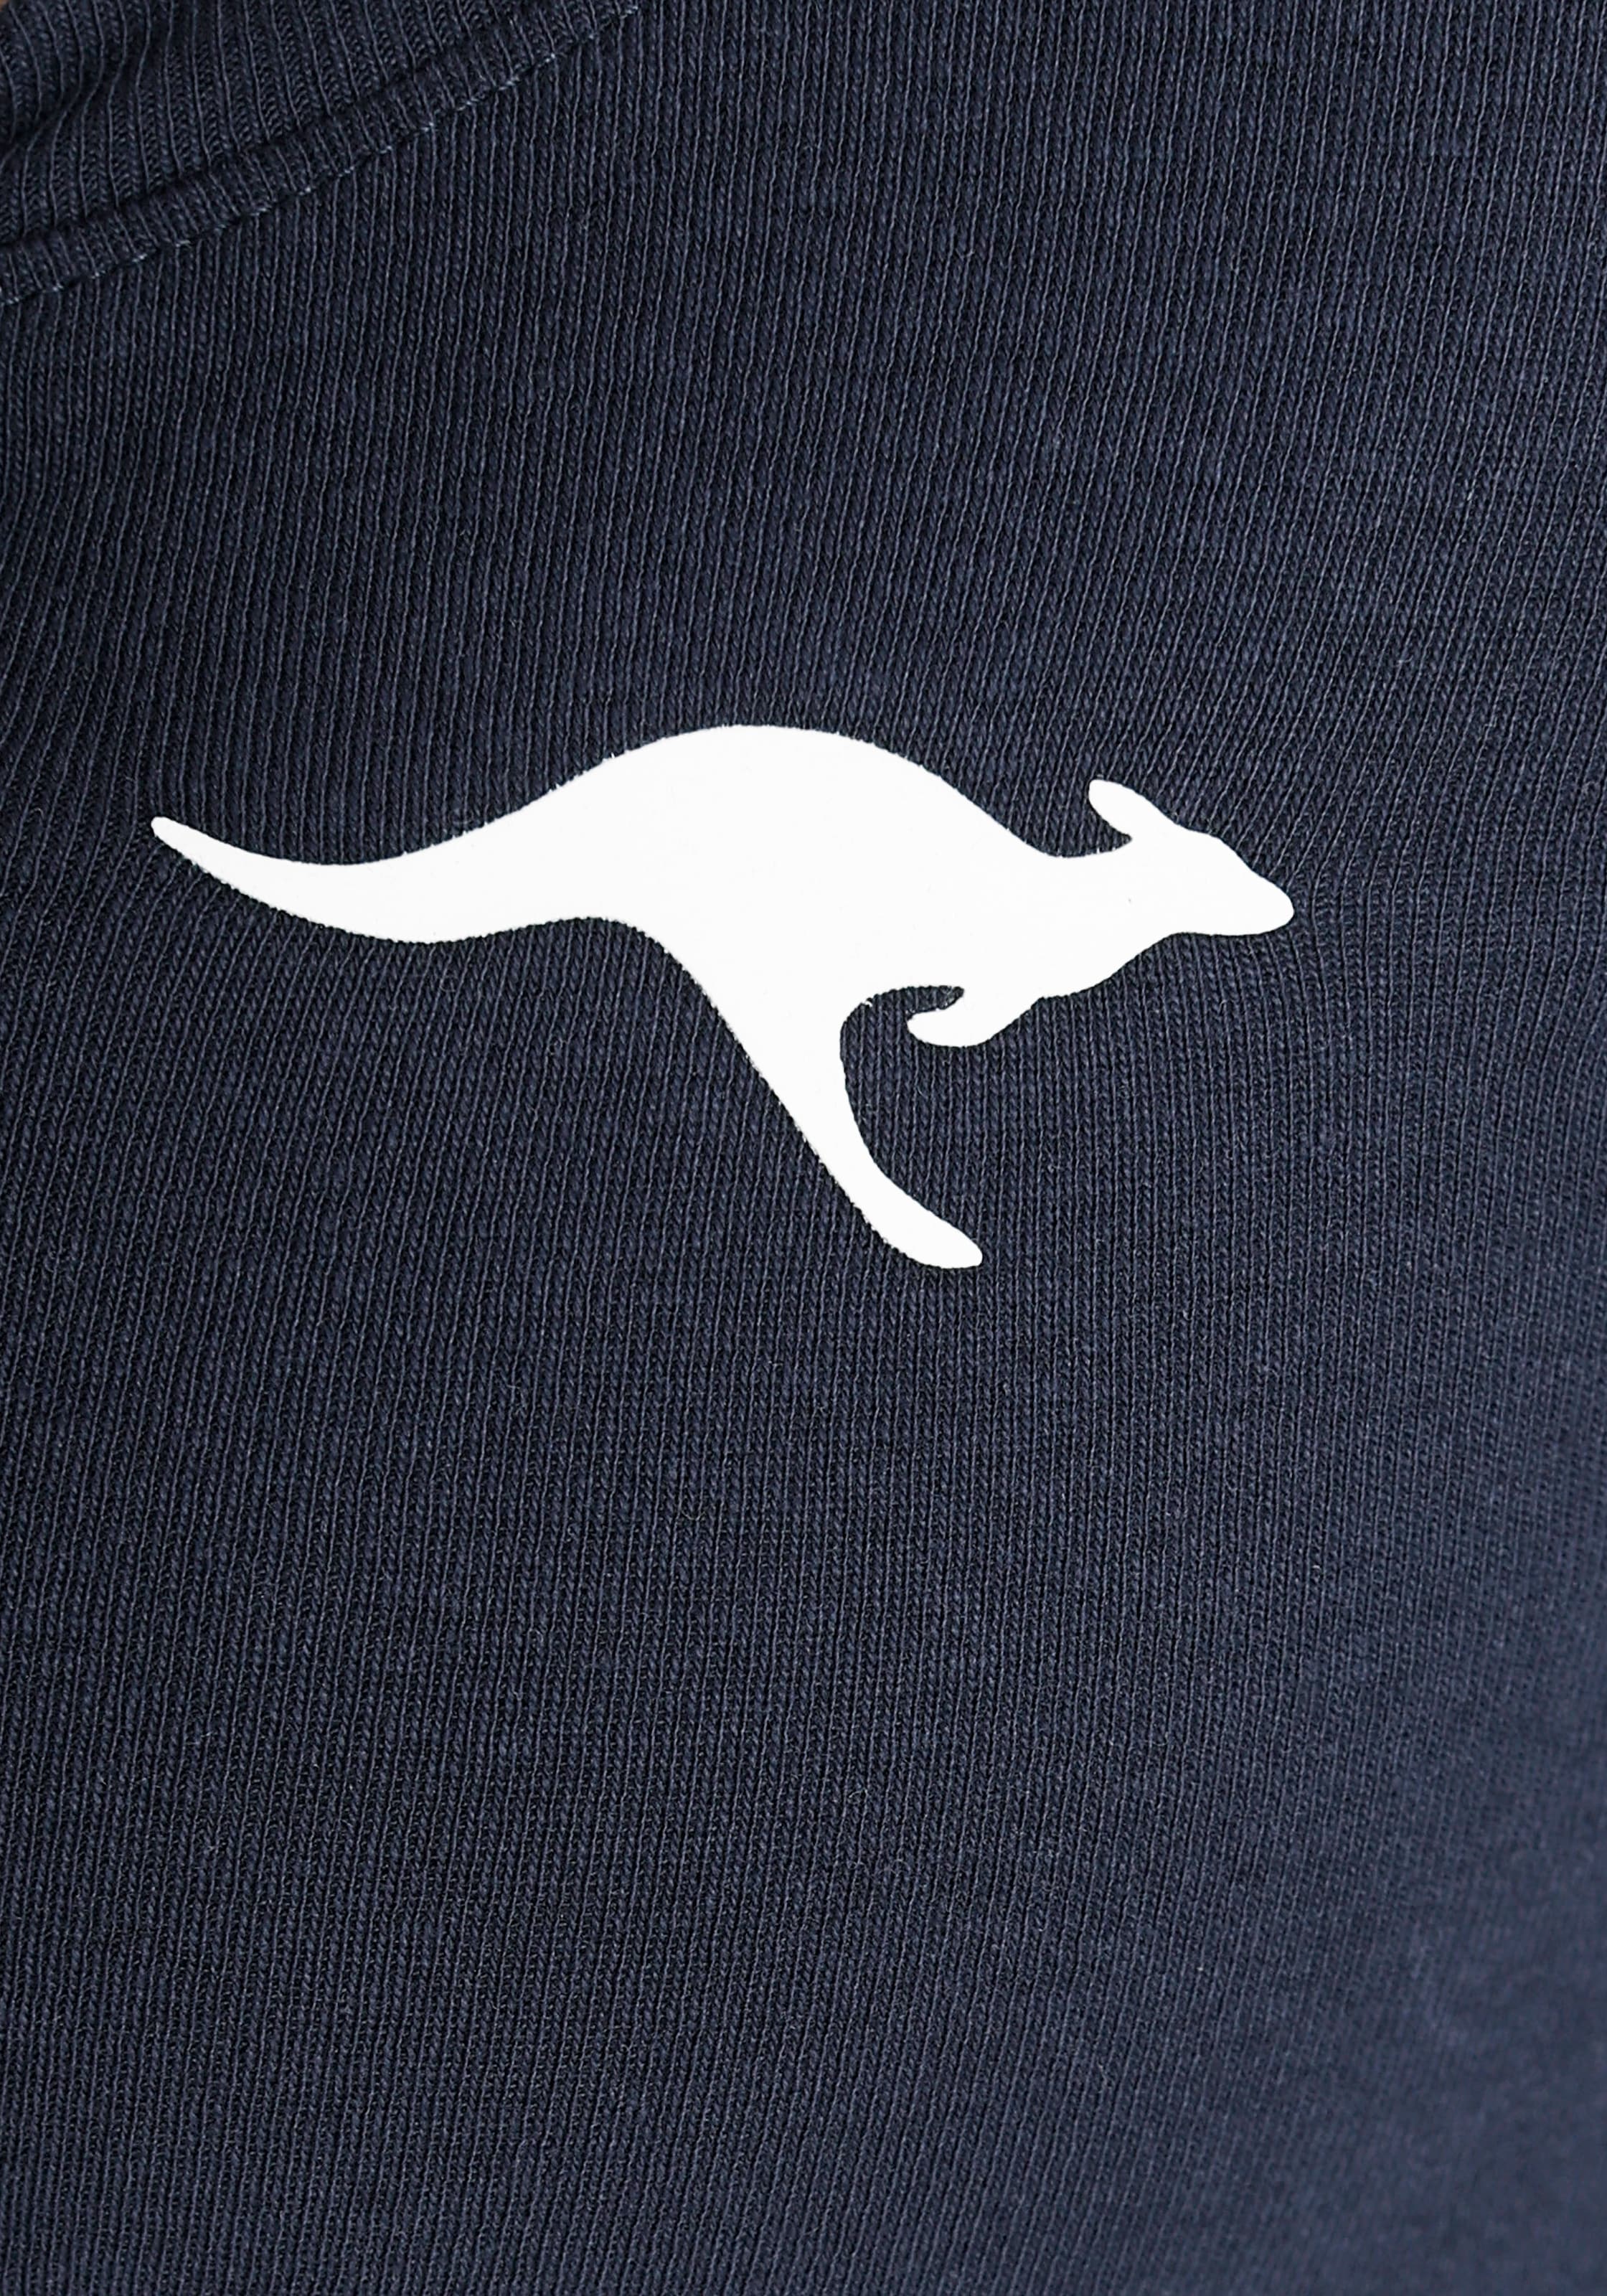 ♕ mit Langarmshirt, Knopfleiste KangaROOS bei Känguru-Logodruck und